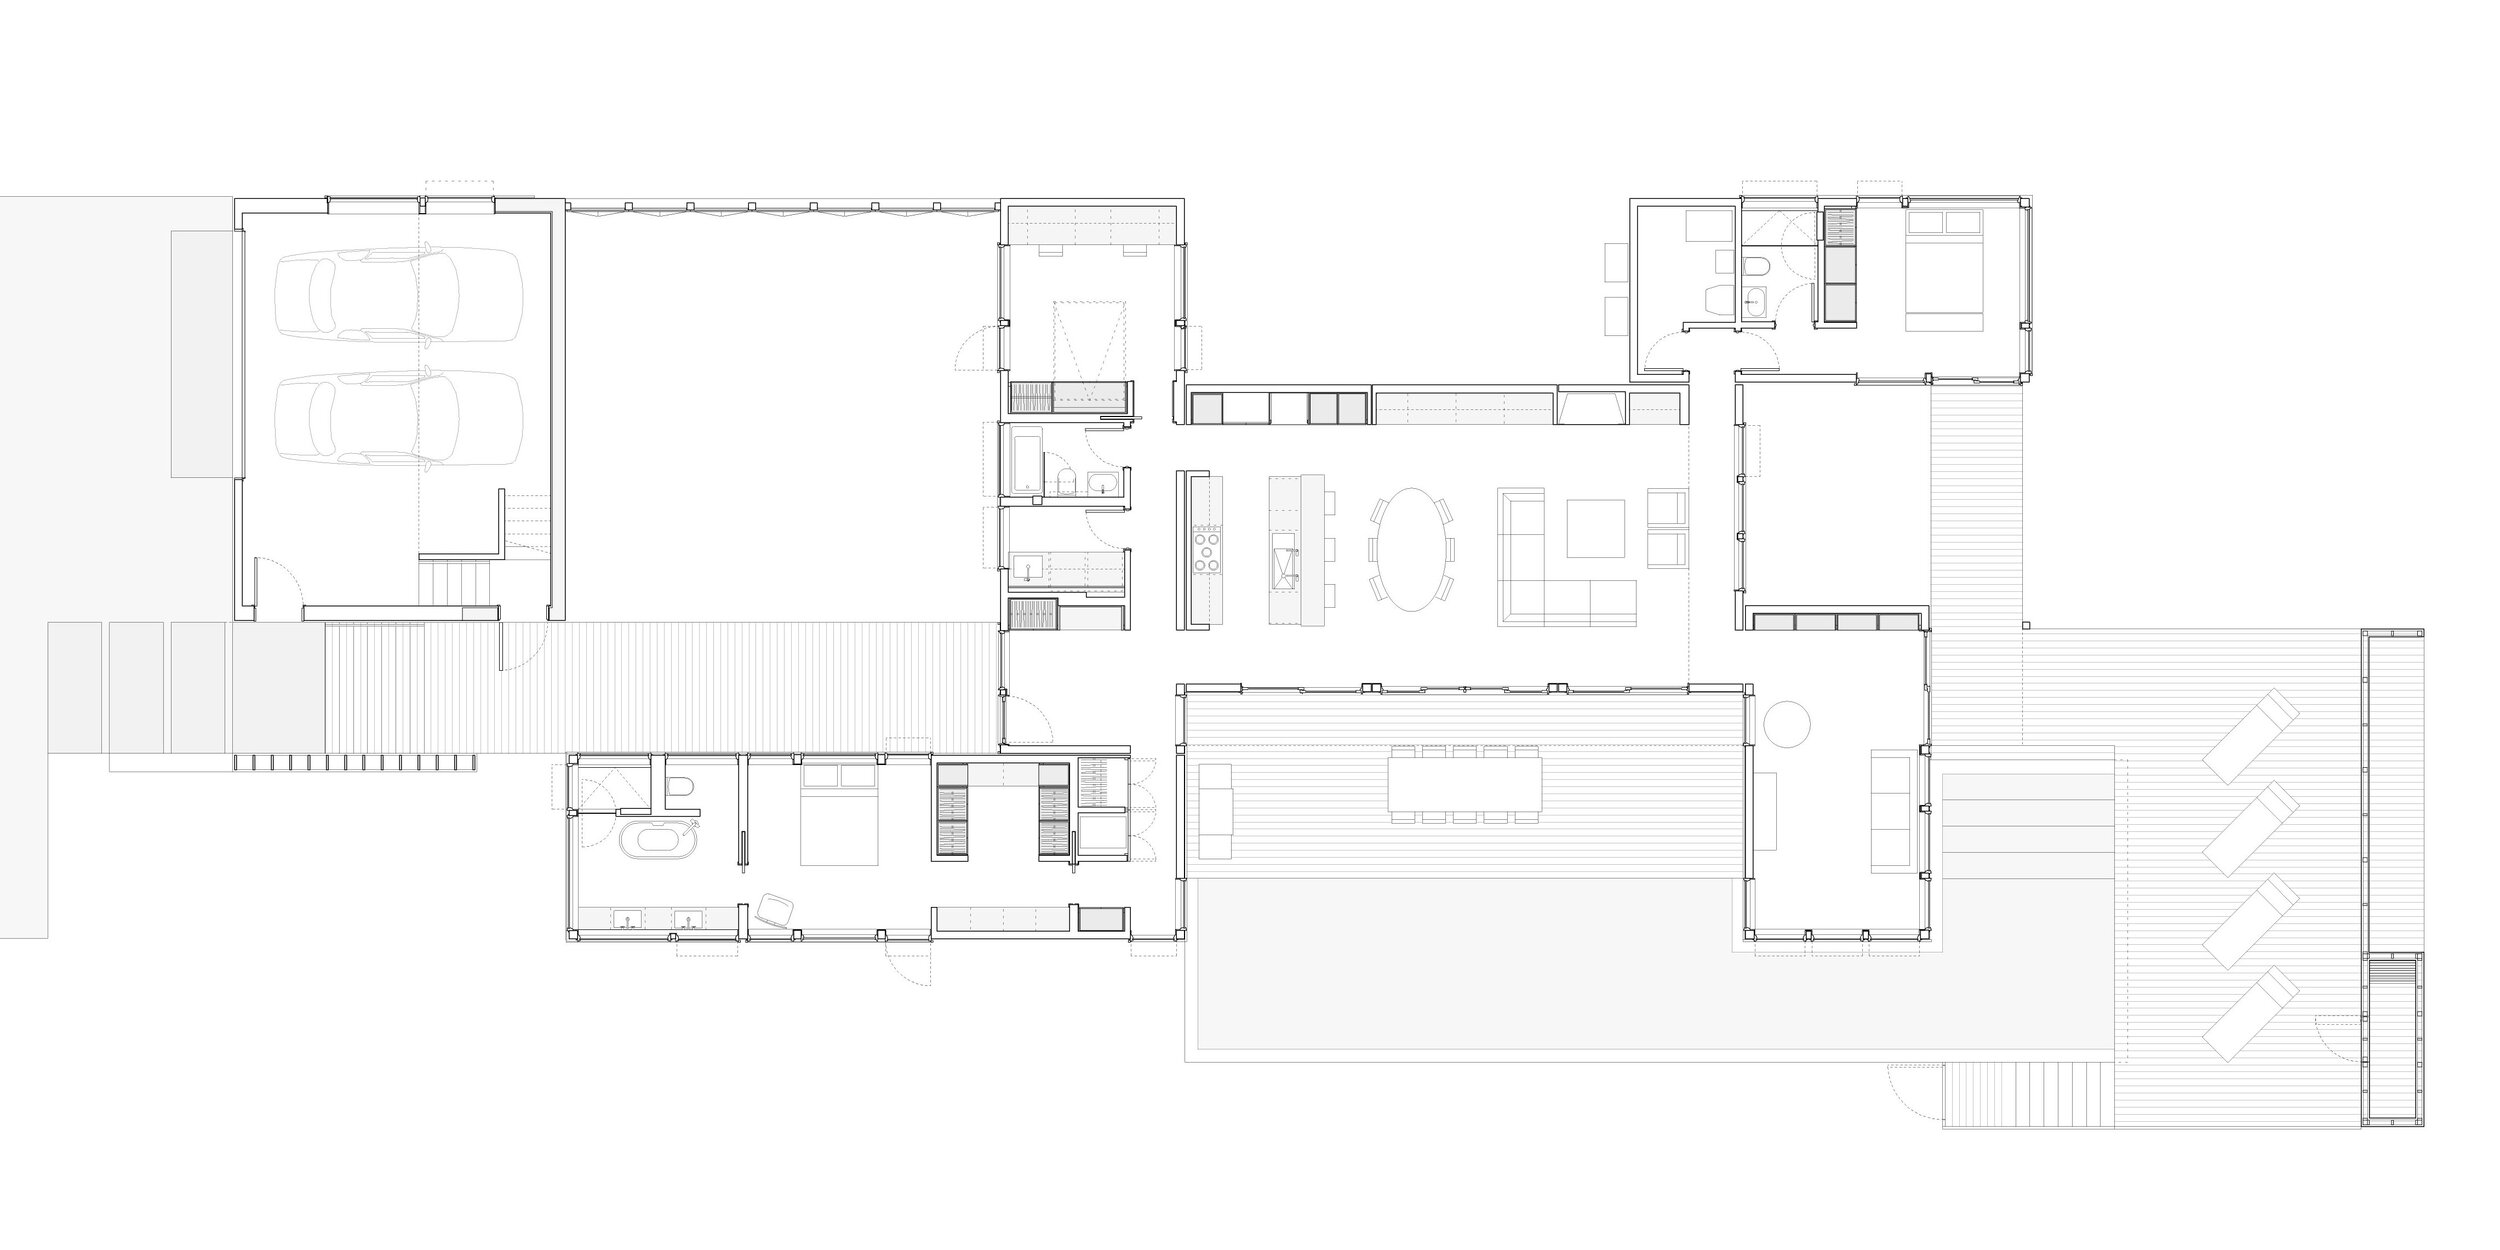 res4-resolution-4-architecture-modern-modular-prefab-home-whalers-residence-amagansett-hamptons-long-island-plan-for-web-zoomed.jpg